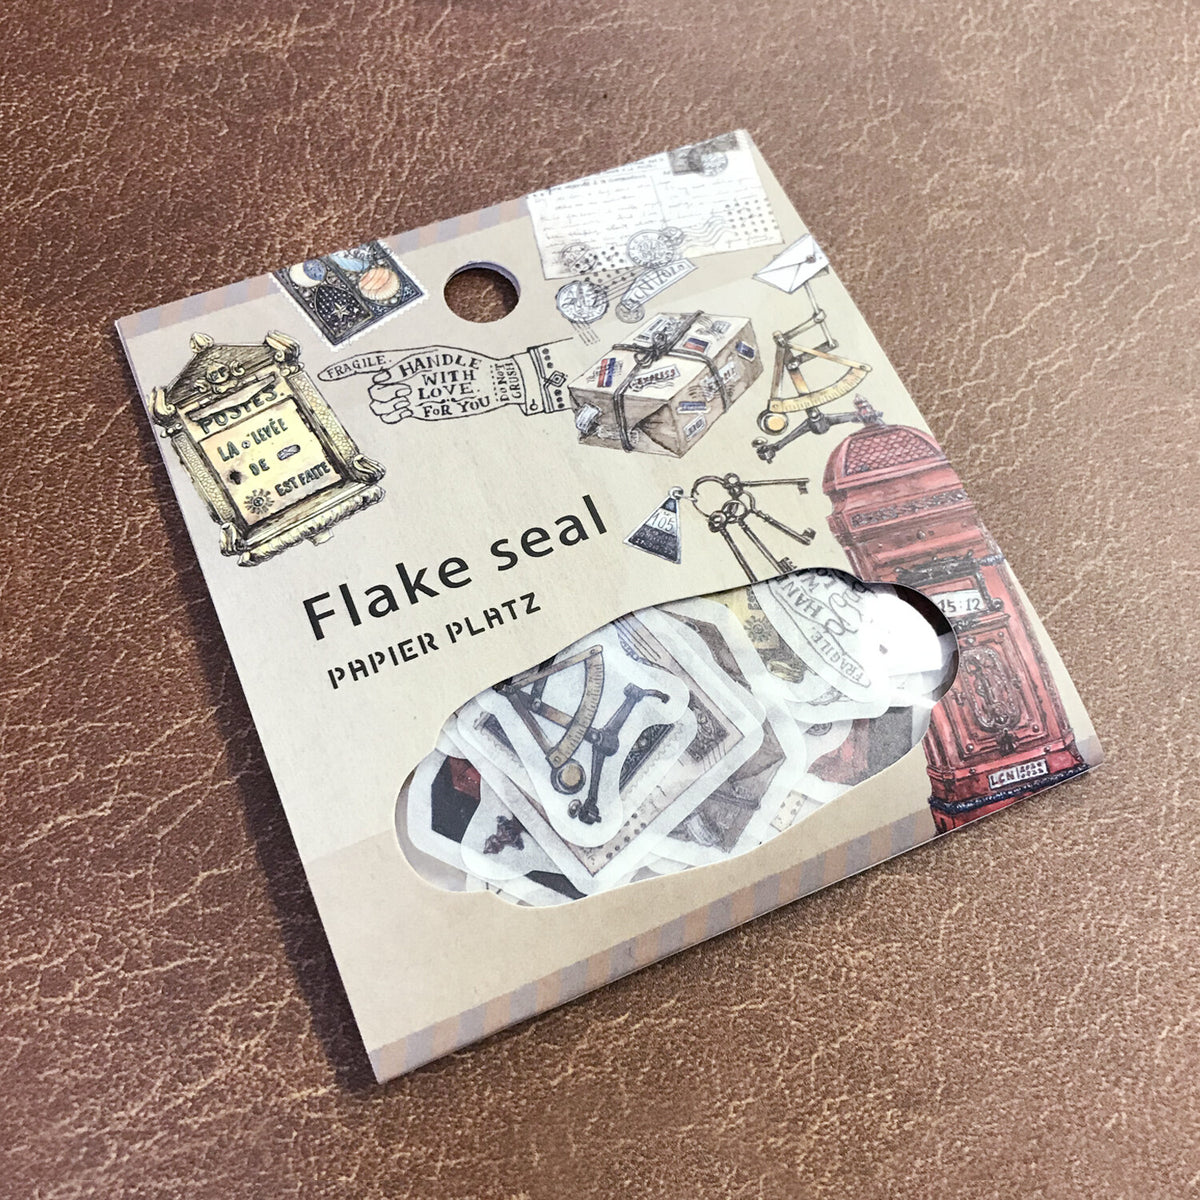 Papier Platz - Sticker Seal - Flake Seal - Post Marks